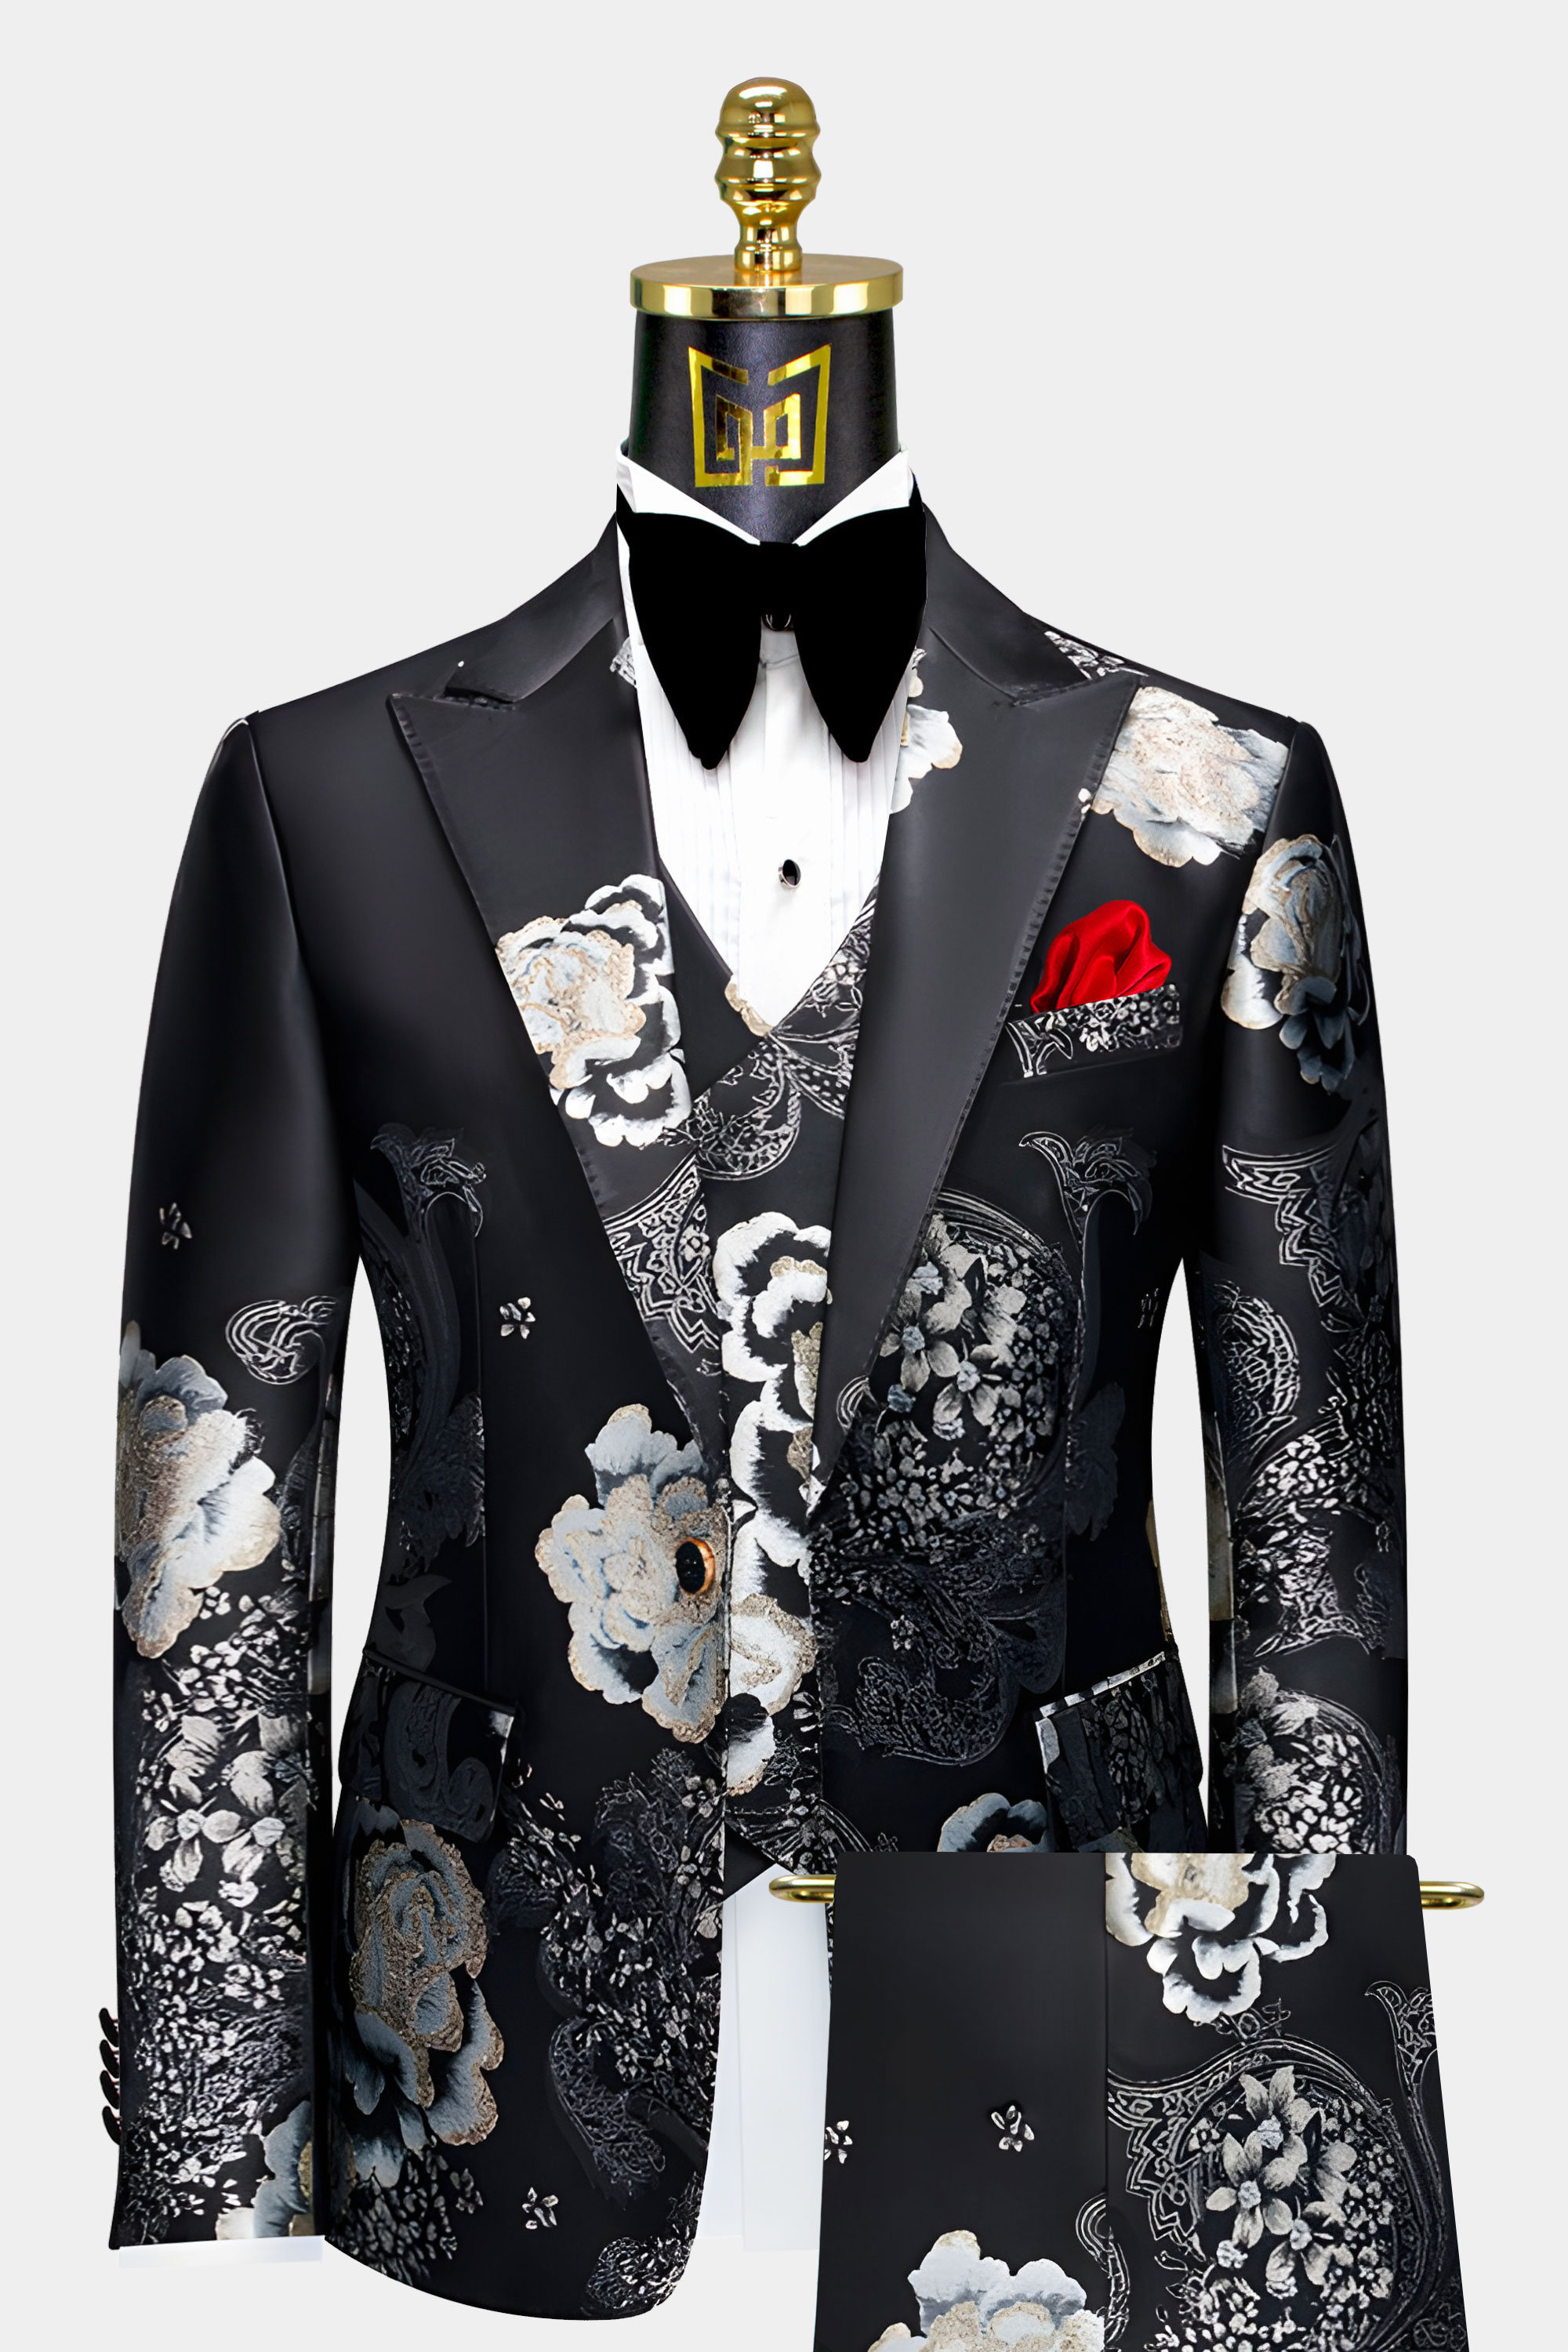 Mens-Black-and-Silver-Suit-Groom-Prom-Wedding-Tuxedo-from-Gentlemansguru.com